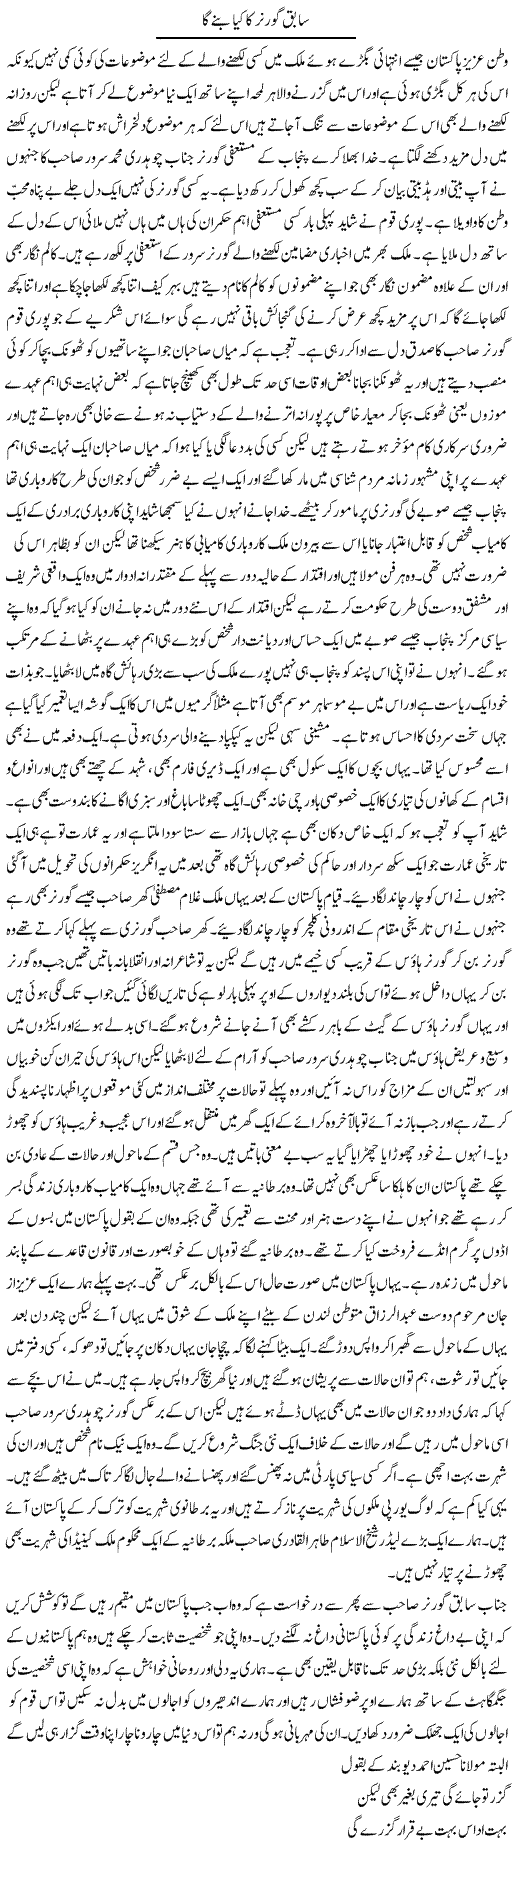 Sabiq Governor Ka Kia Bane Ga | Abdul Qadir Hassan | Daily Urdu Columns